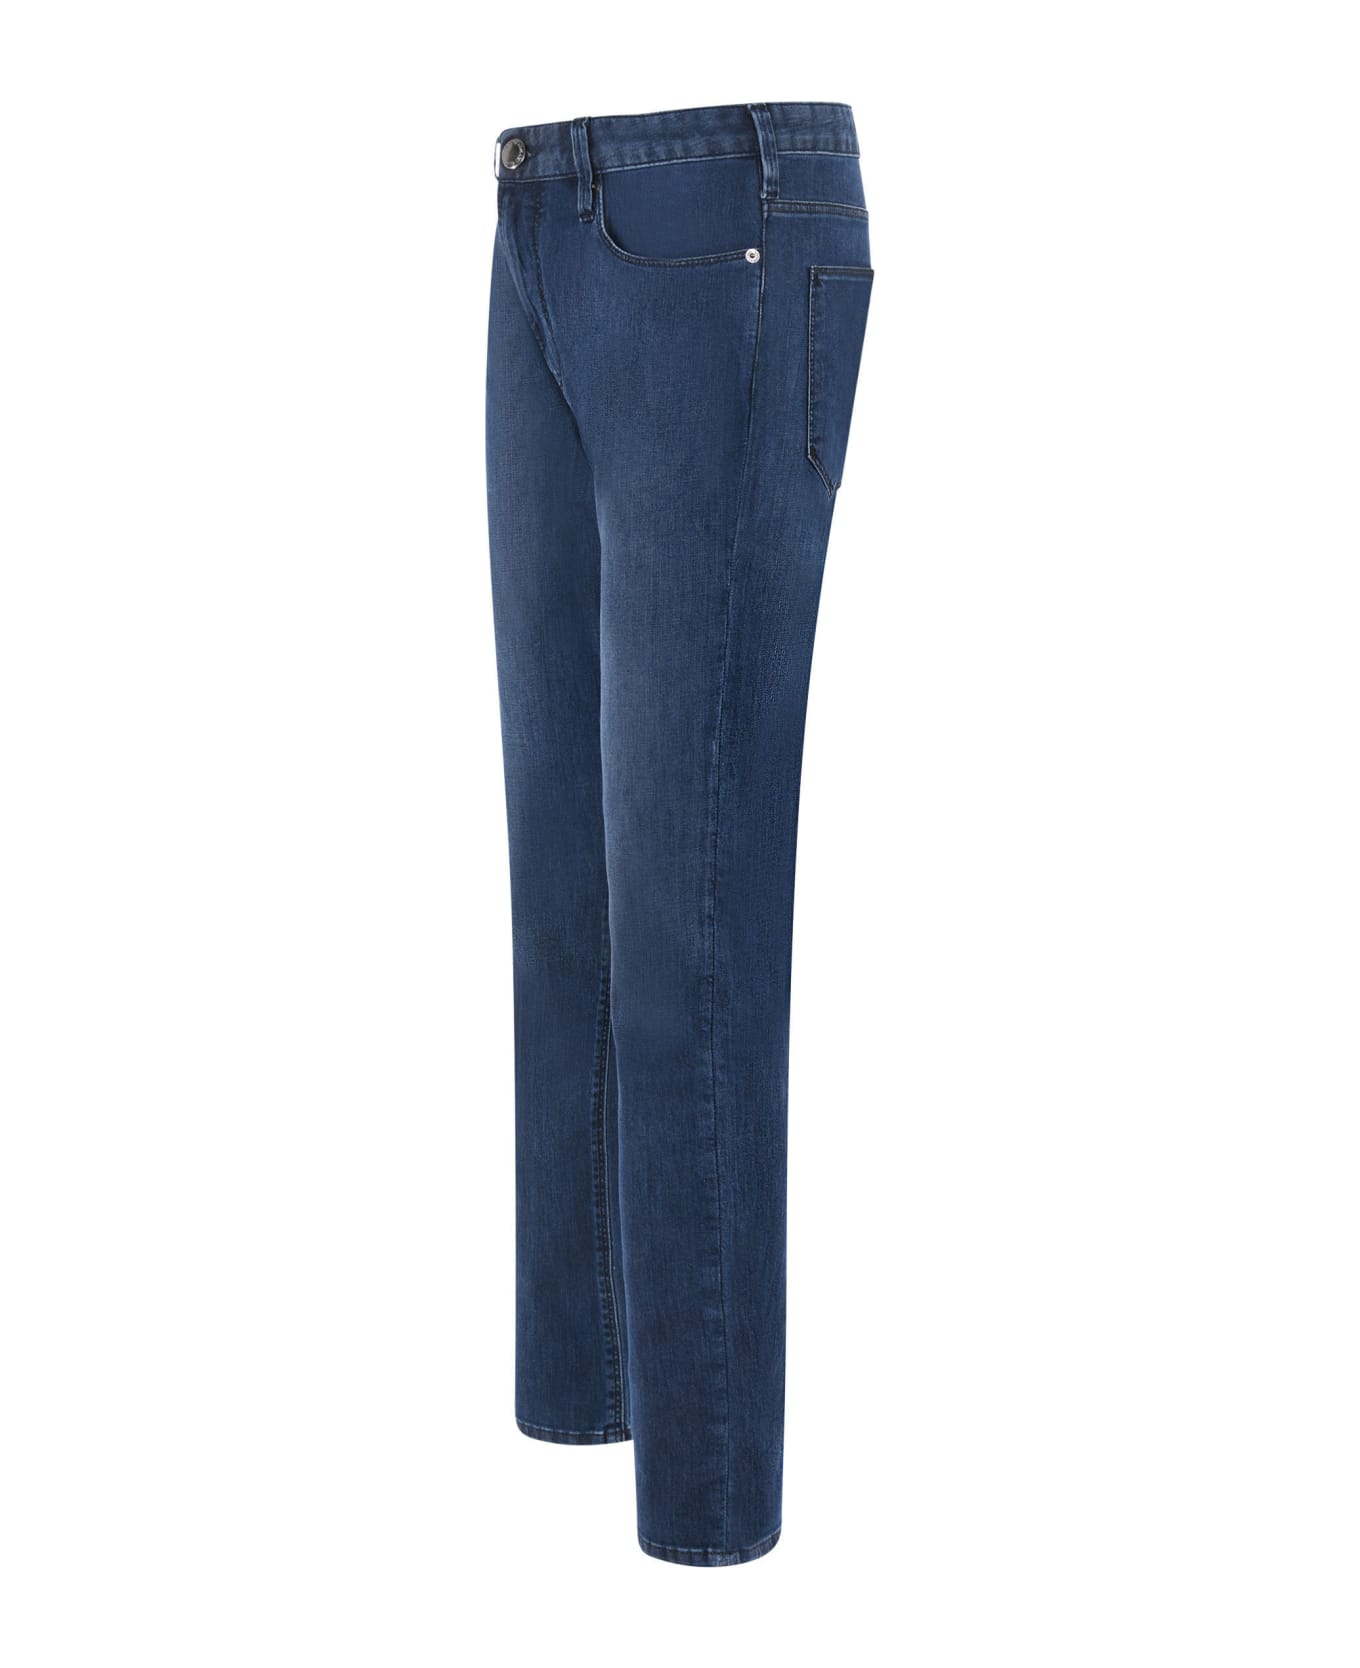 Emporio Armani Jeans - Denim